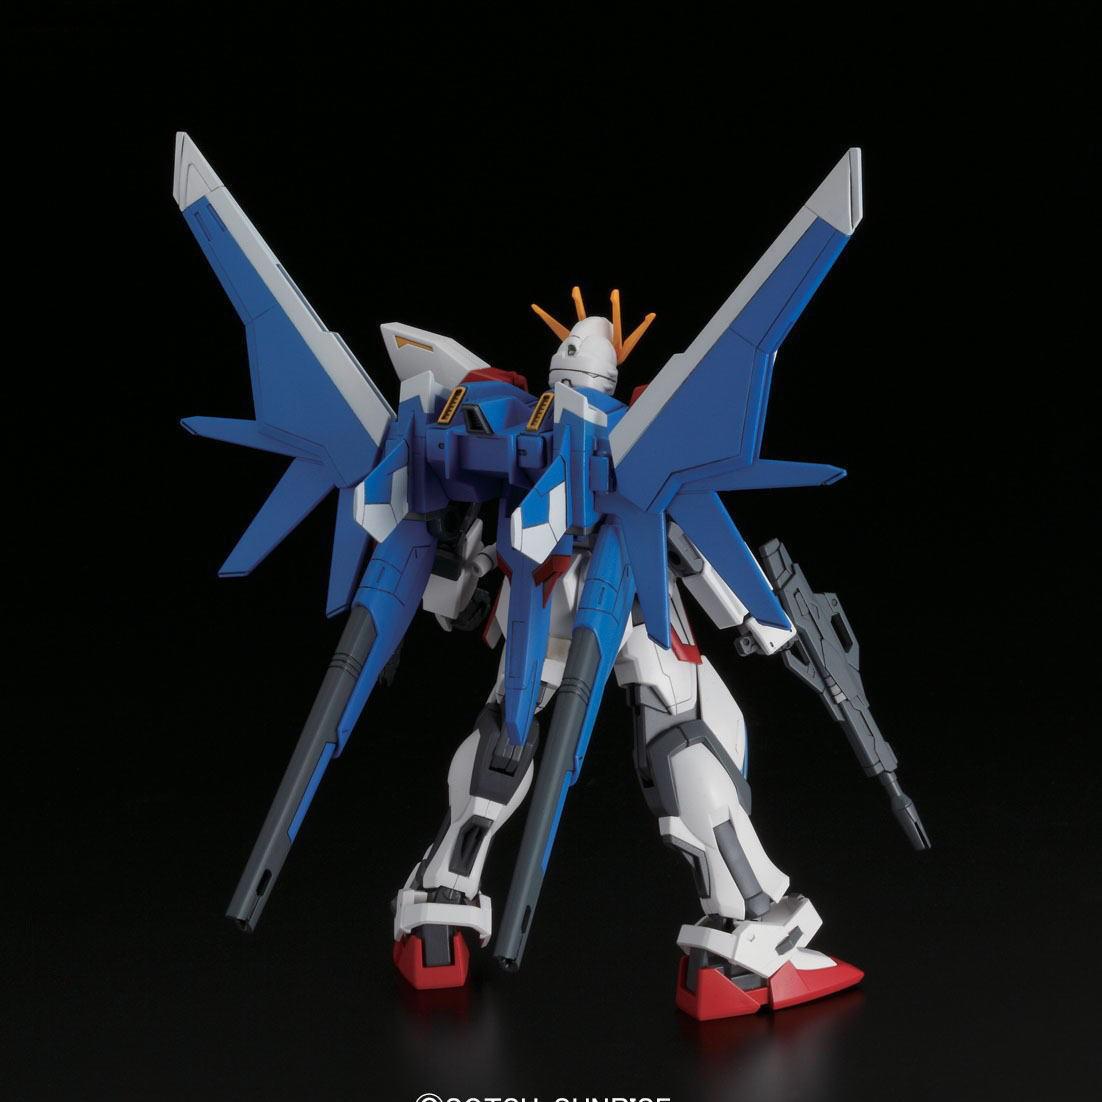 HGBF Build Strike Gundam Full Package